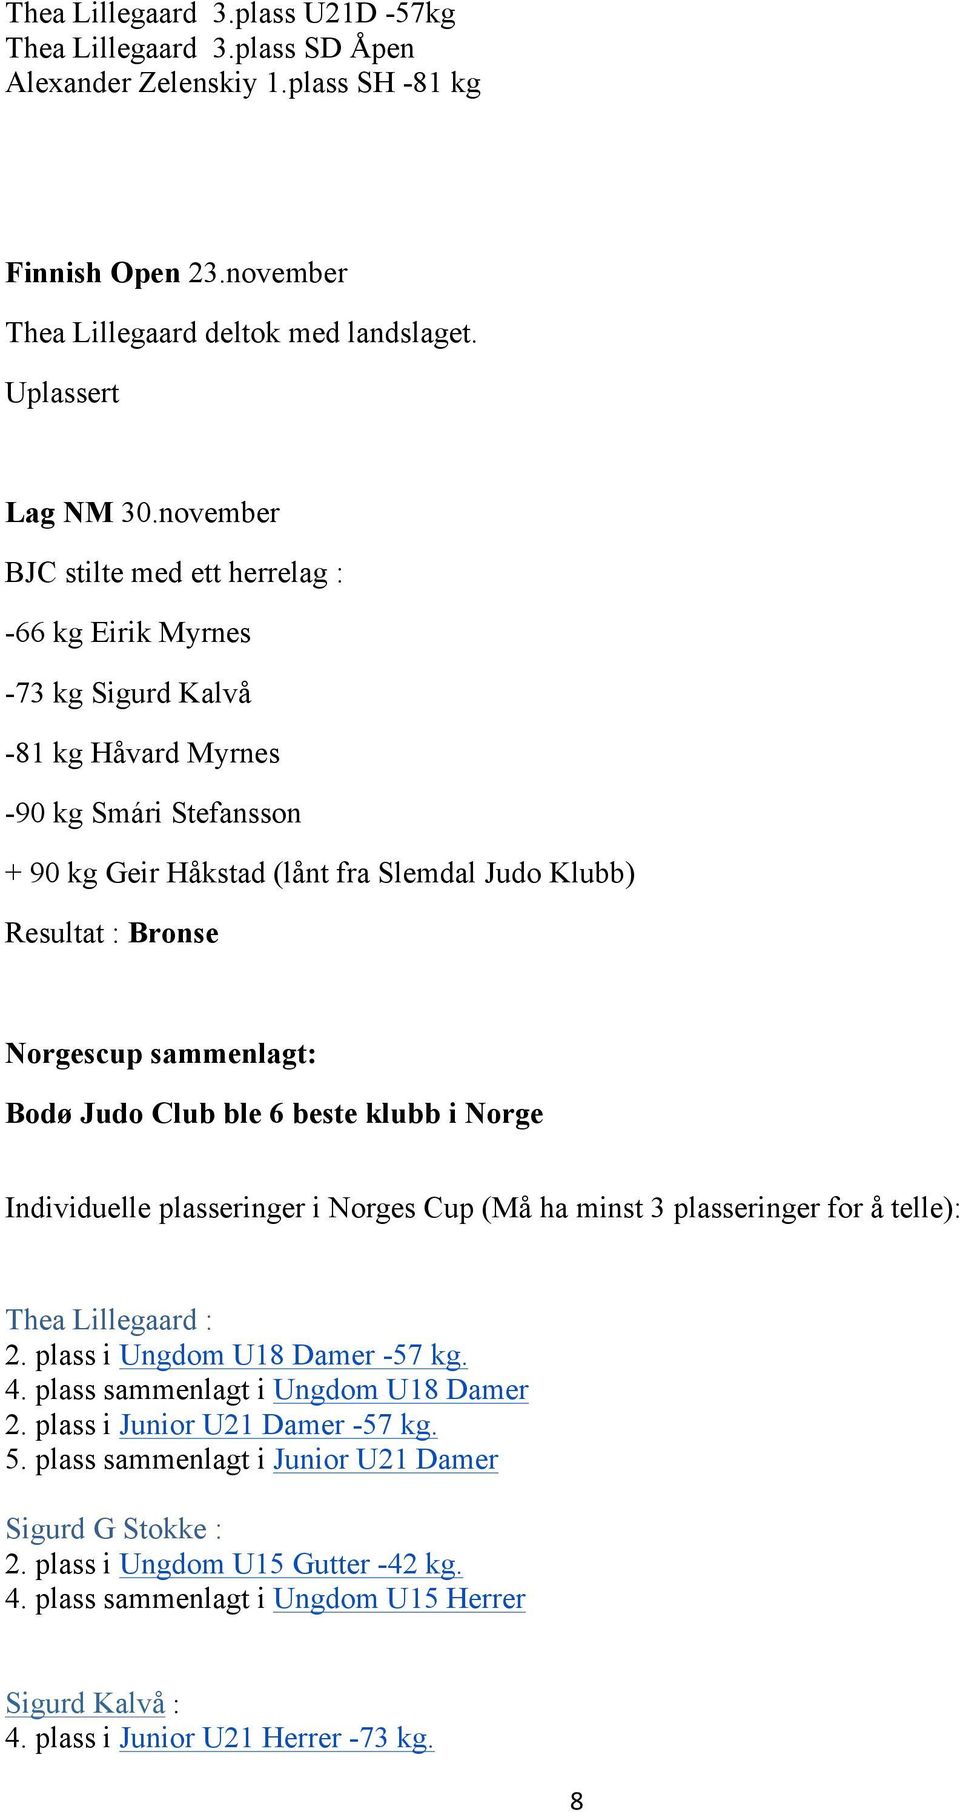 Norgescup sammenlagt: Bodø Judo Club ble 6 beste klubb i Norge Individuelle plasseringer i Norges Cup (Må ha minst 3 plasseringer for å telle): Thea Lillegaard : 2. plass i Ungdom U18 Damer -57 kg. 4.